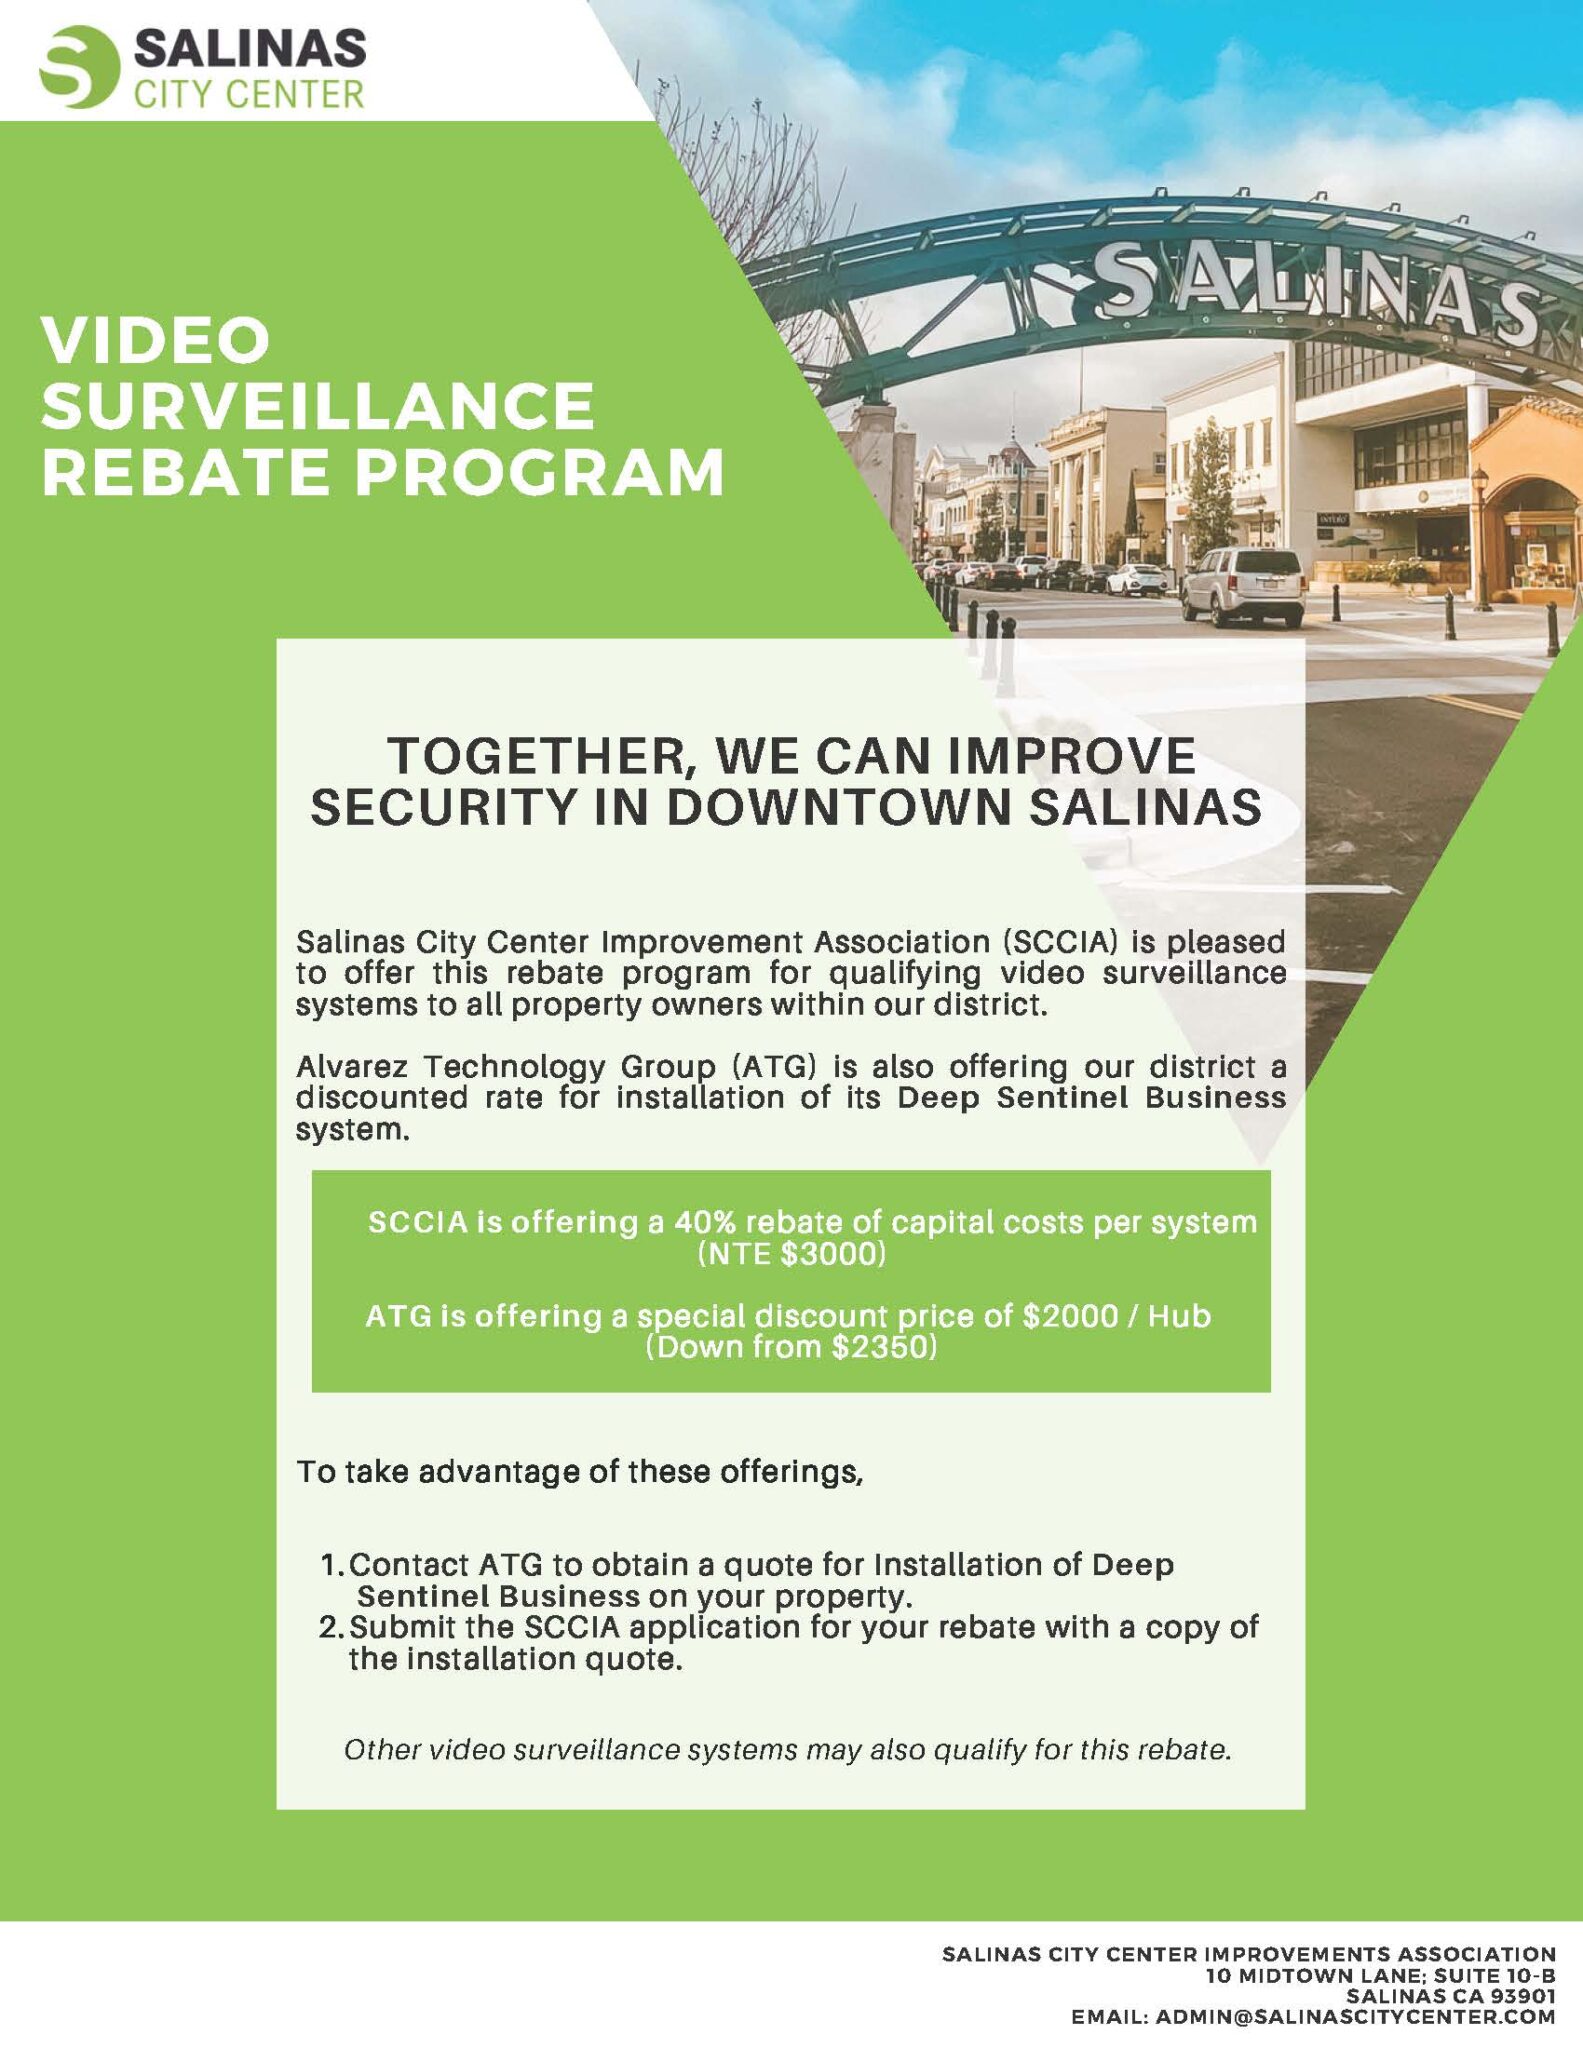 salinas-city-center-video-surveillance-rebate-program-salinas-city-center